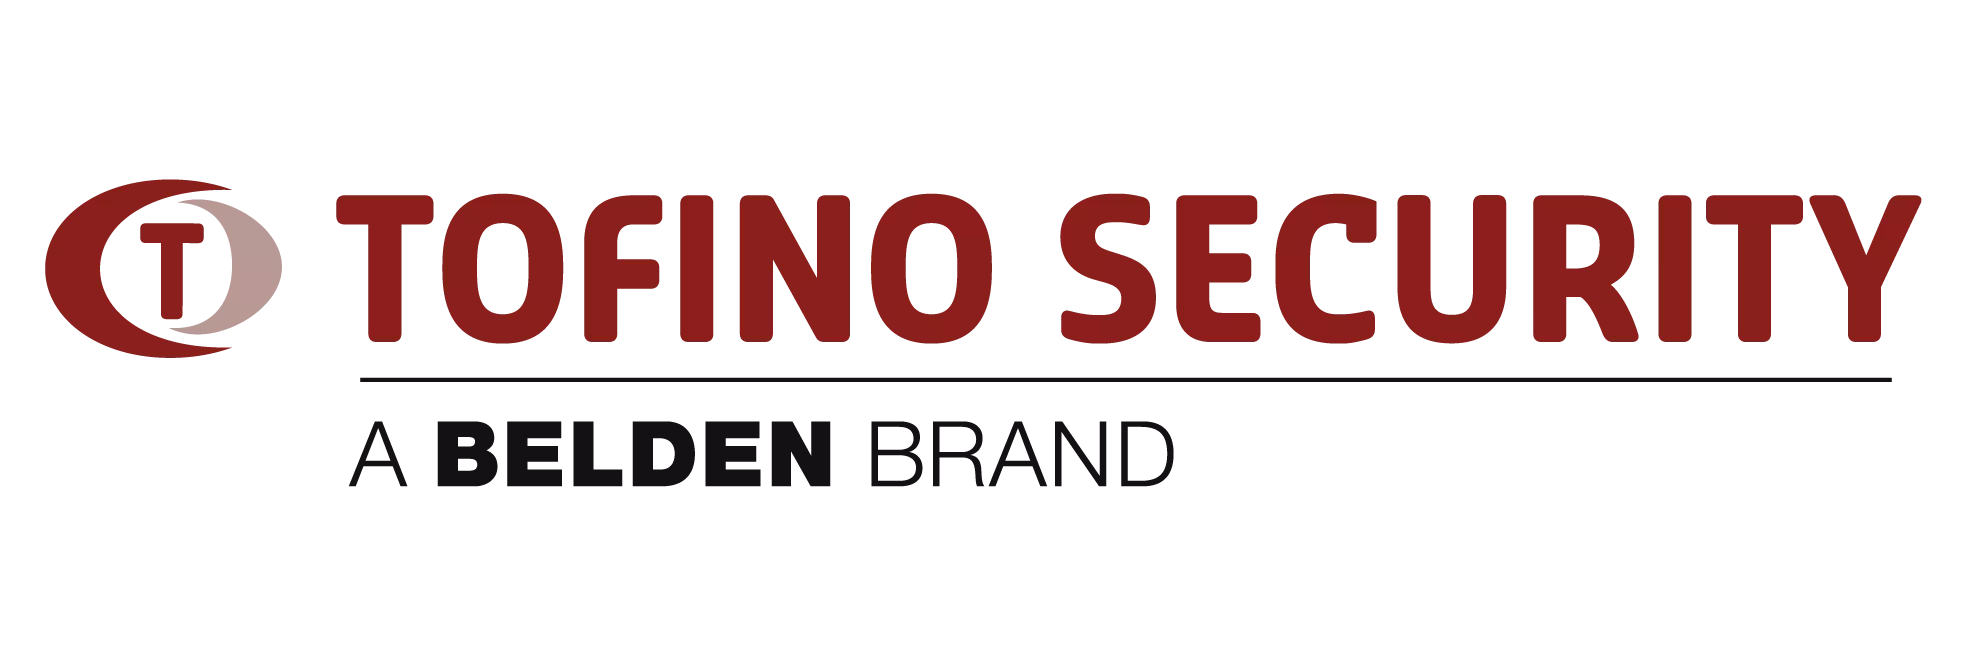 Logo de Tofino Security